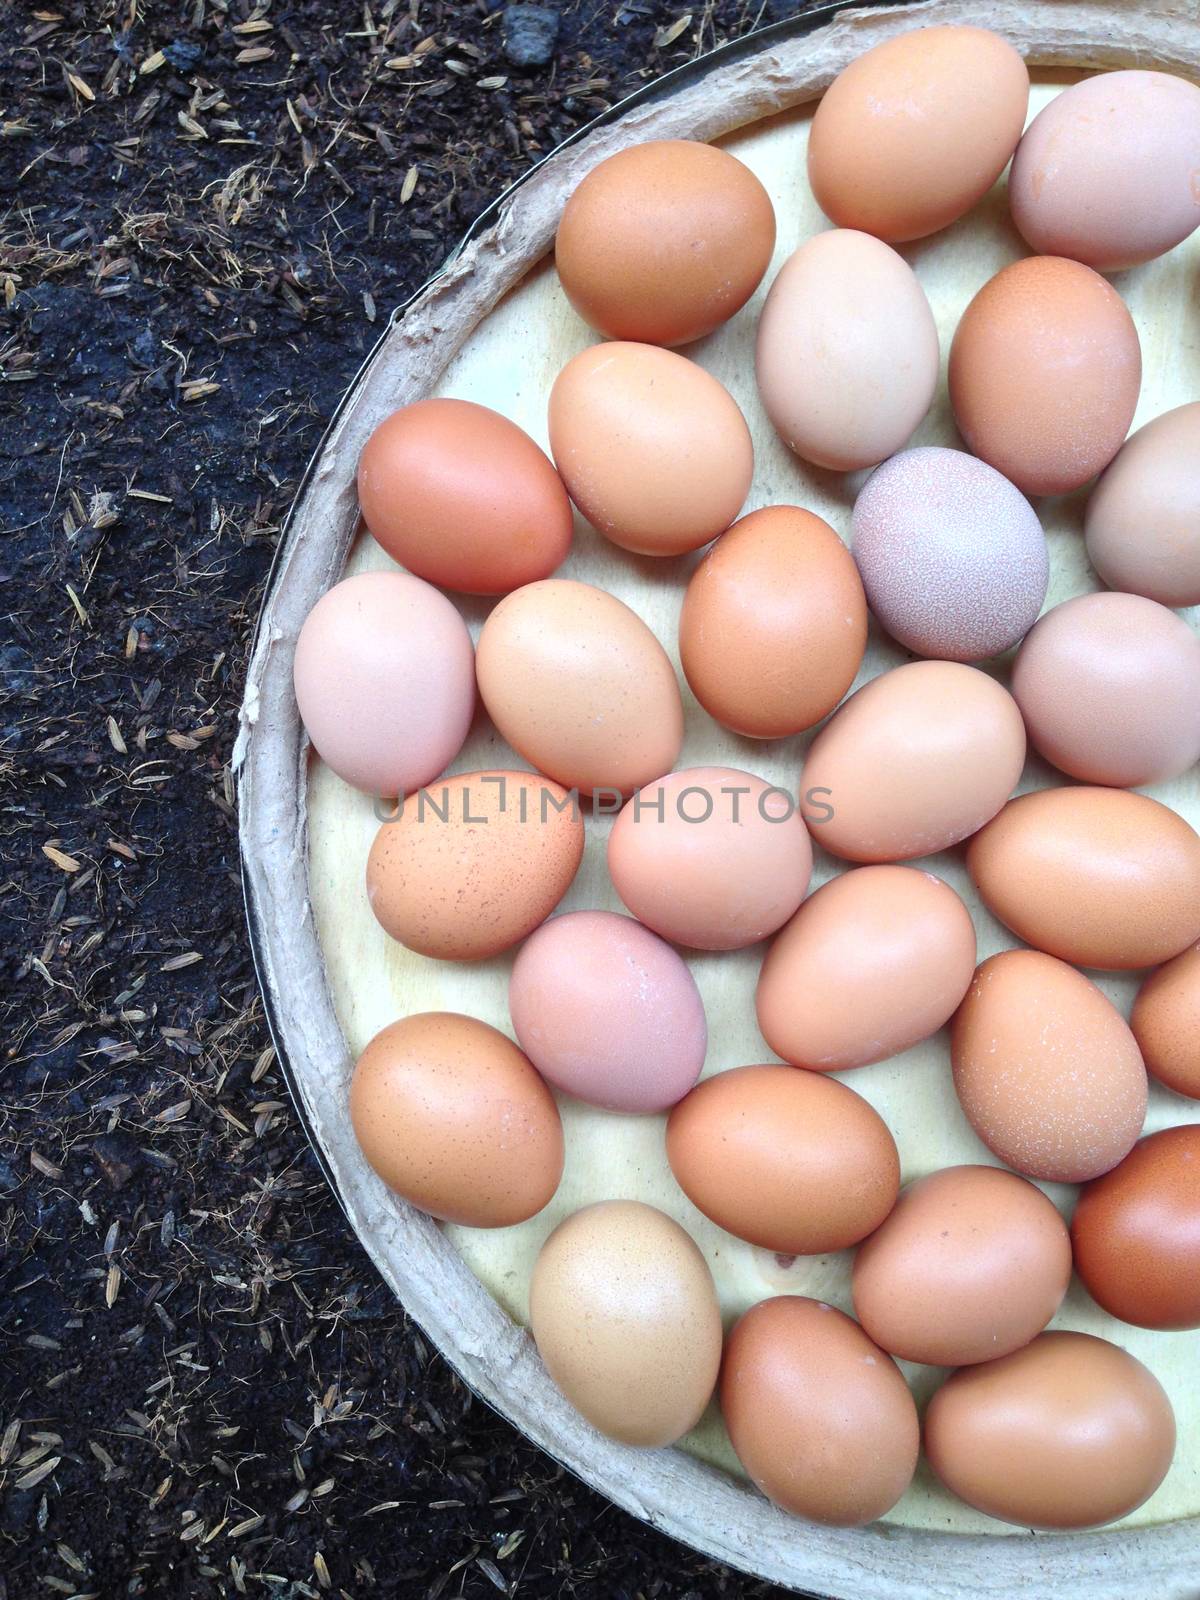 Eggs on wooden plate on black soil by Bowonpat